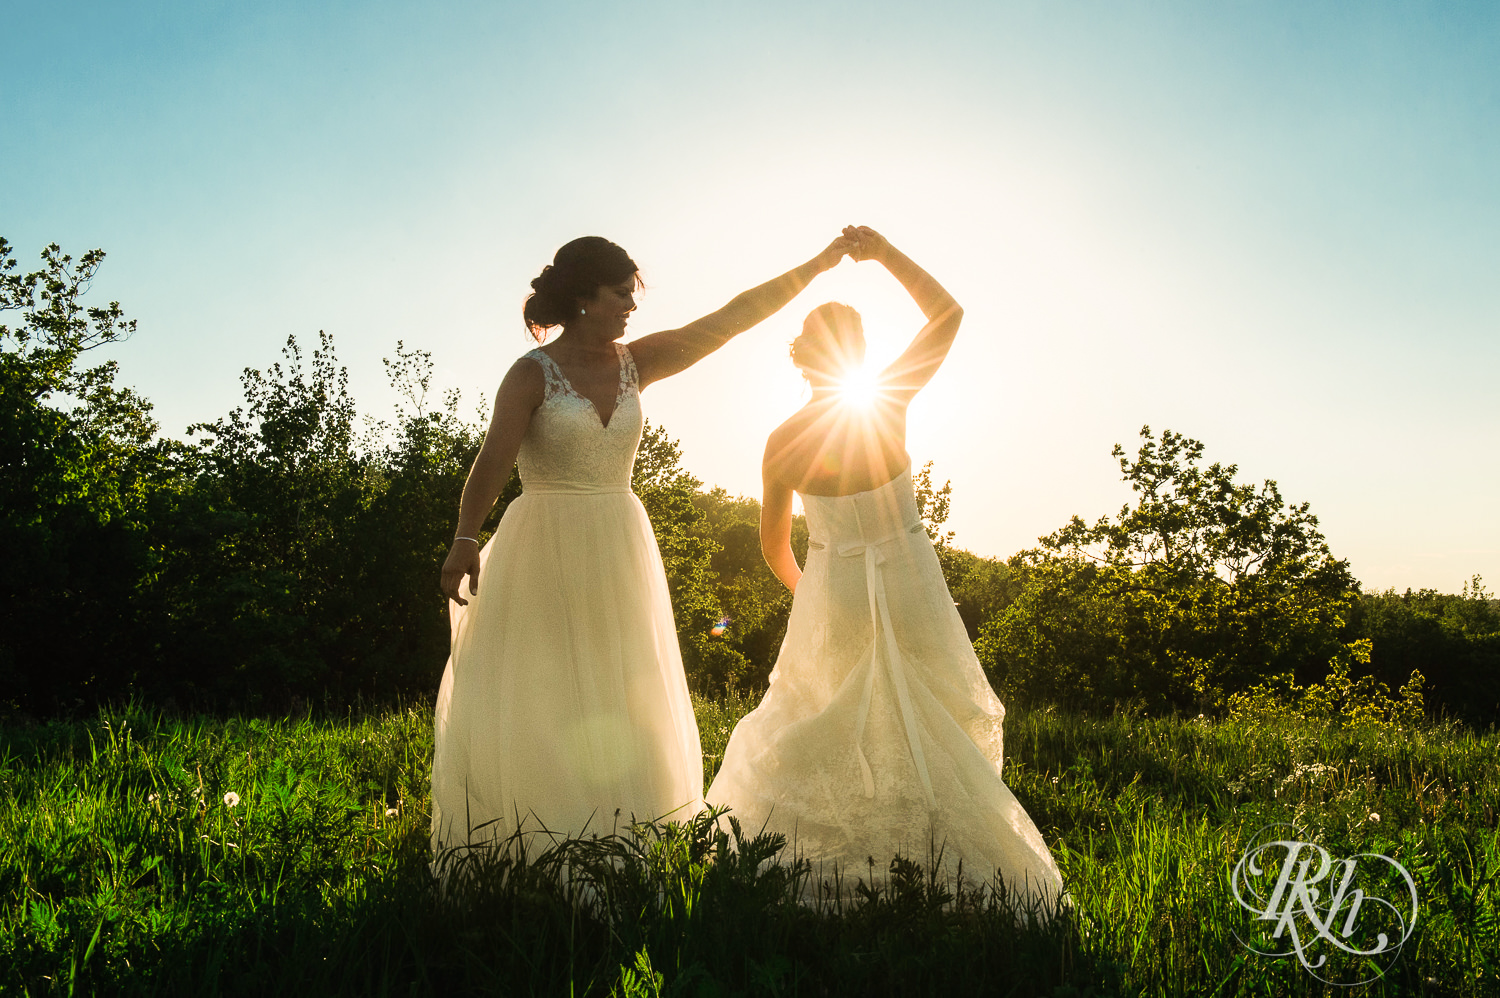 Lesbian brides dance during sunset at Spirit Mountain in Duluth, Minnesota.